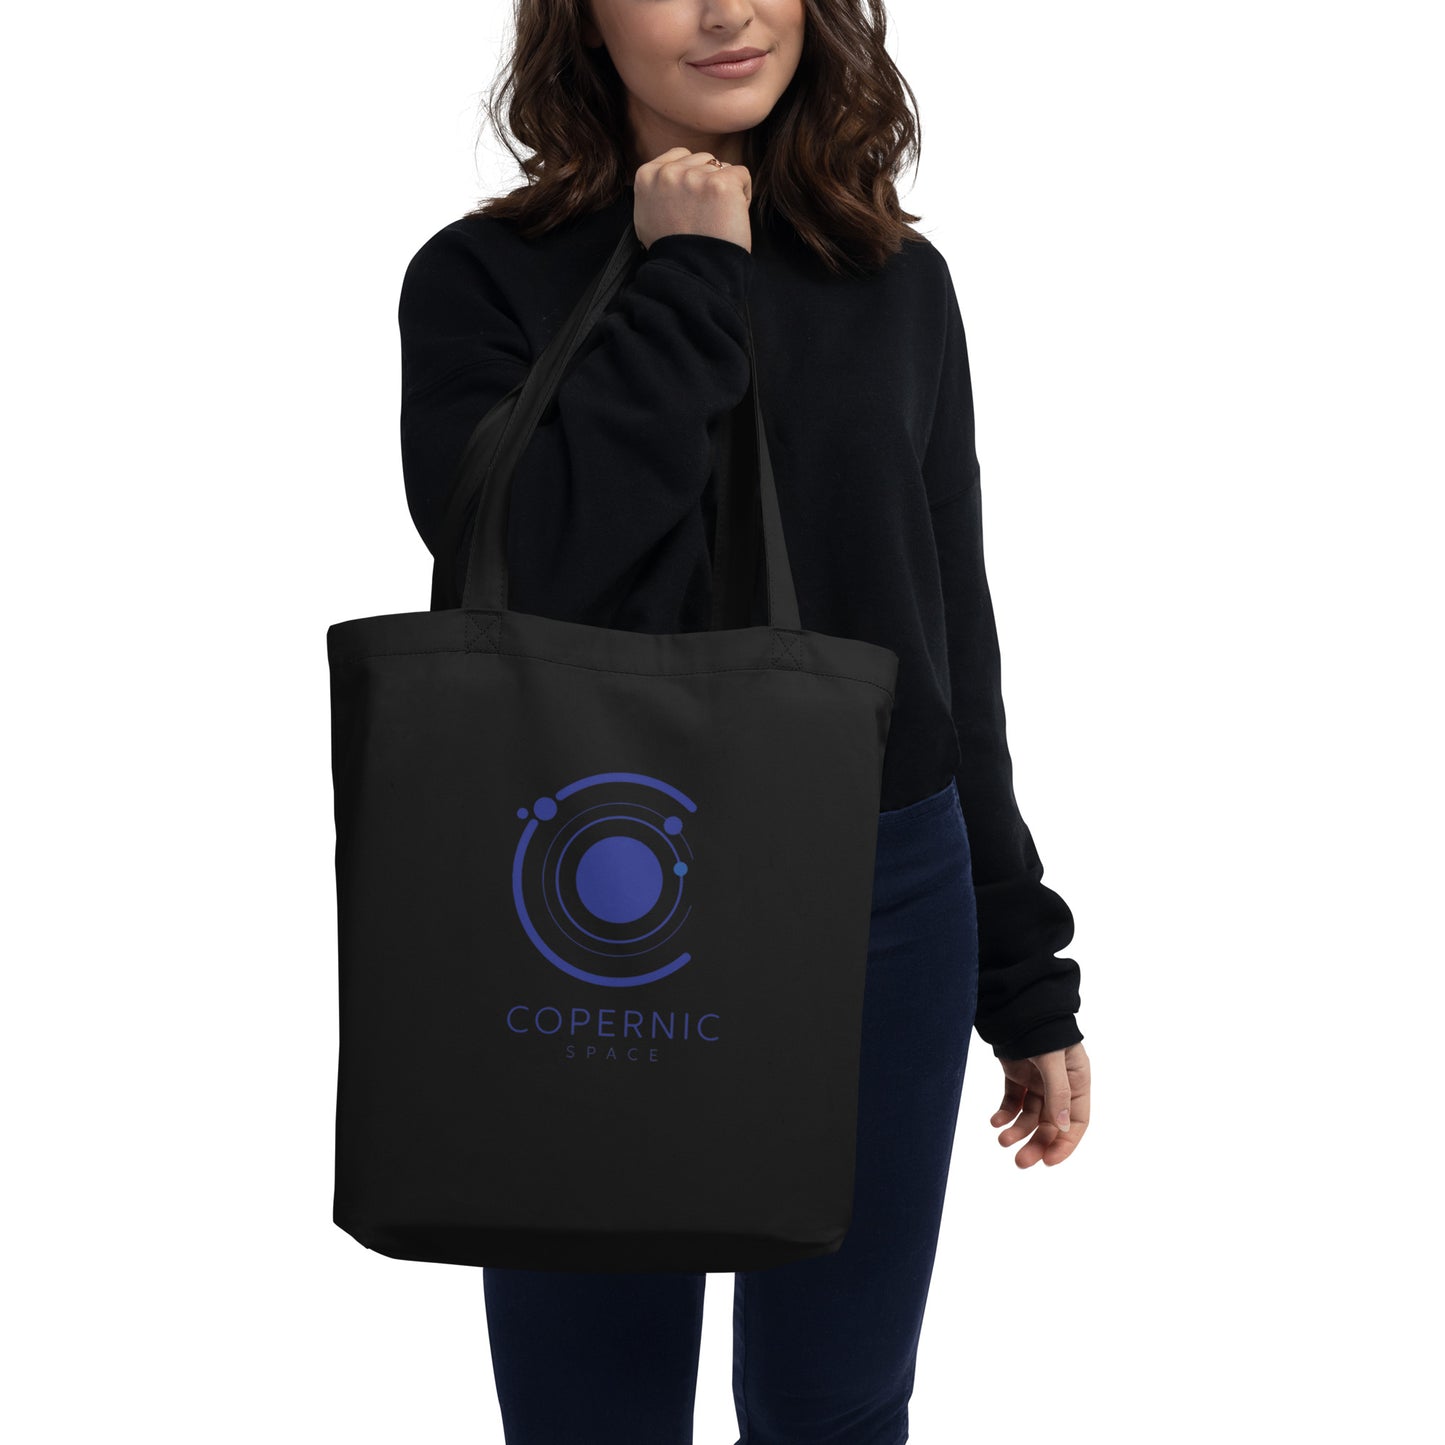 Copernic Space Eco Tote Bag